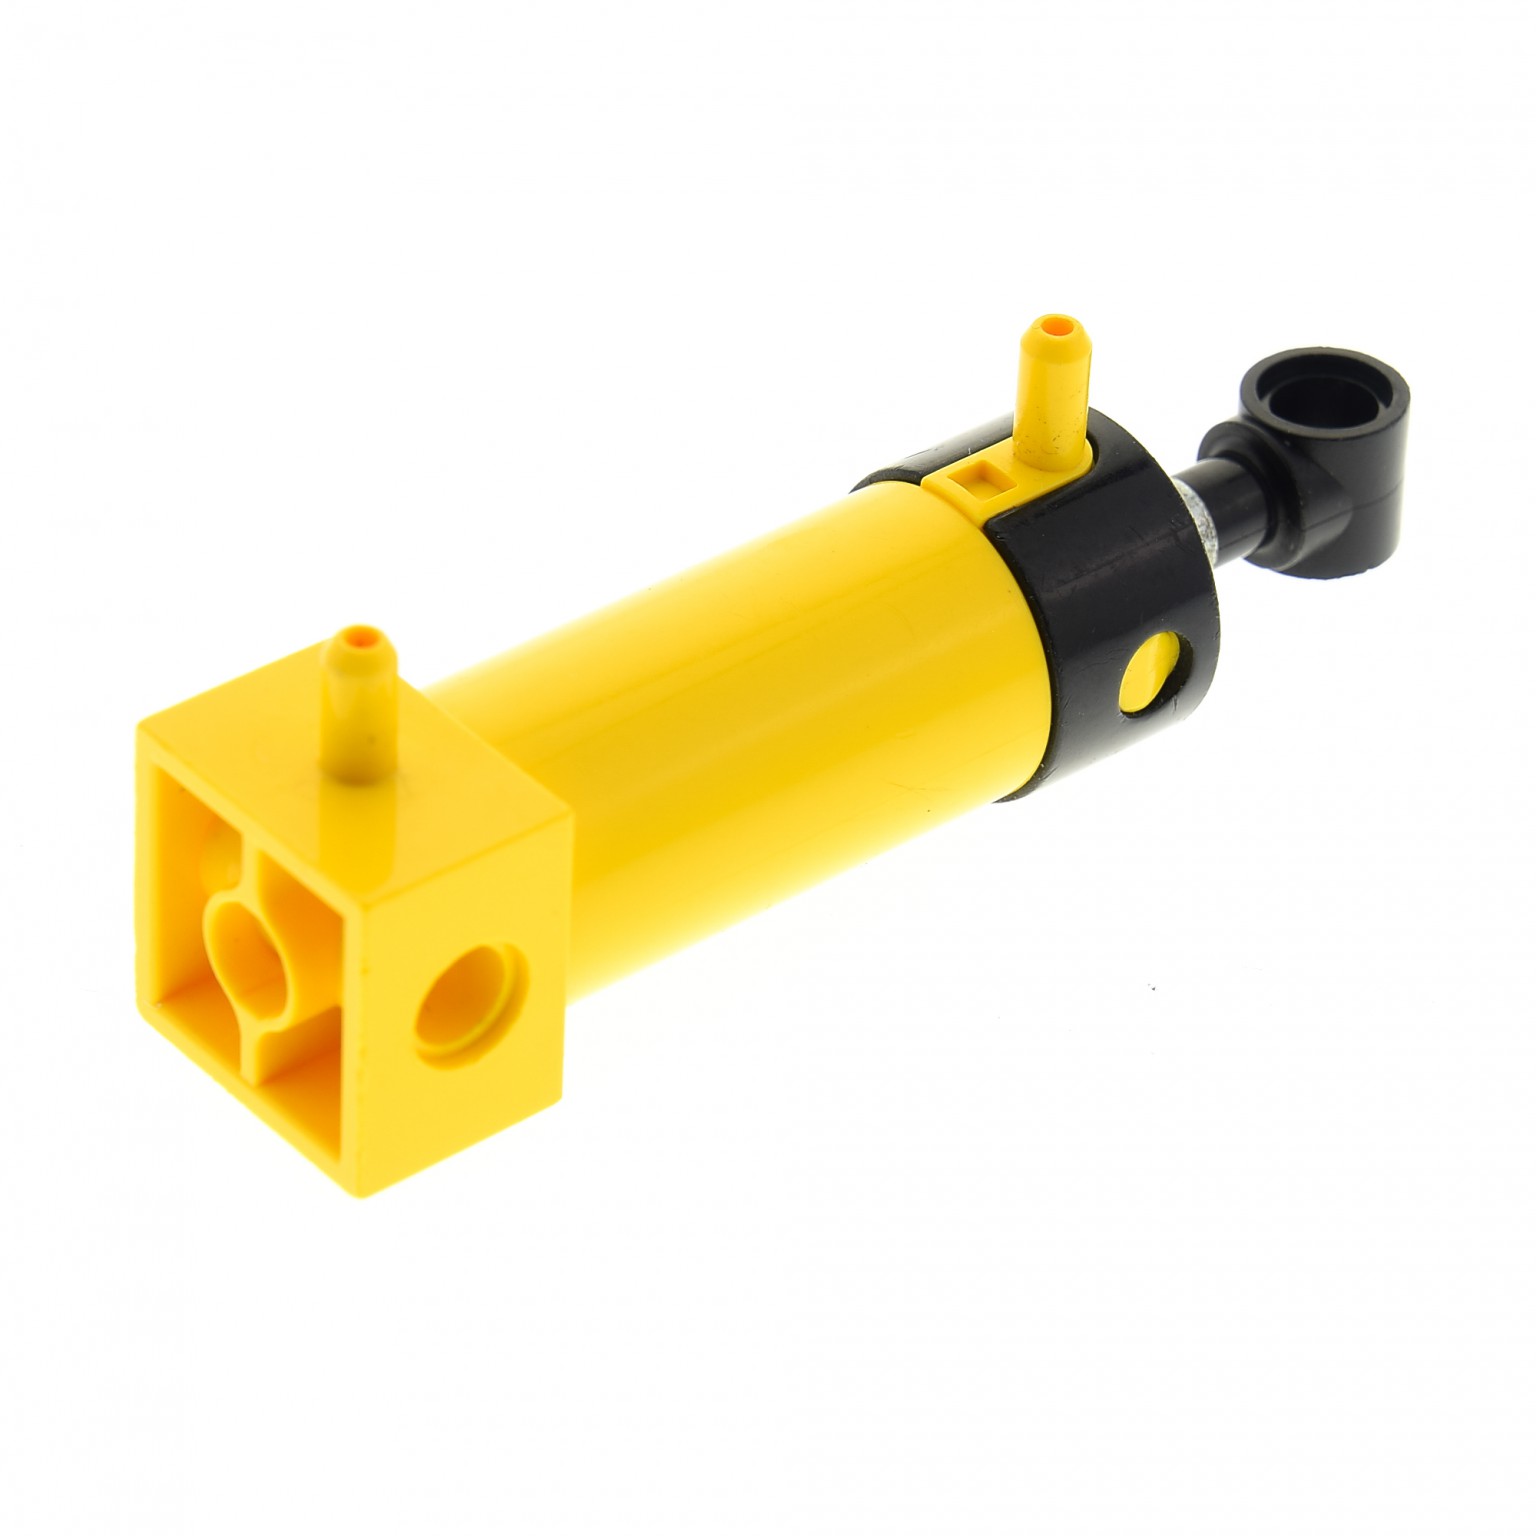 Lego Technik Technic Pneumatik Zylinder Pumpe 2793c01 gelb schwarz 